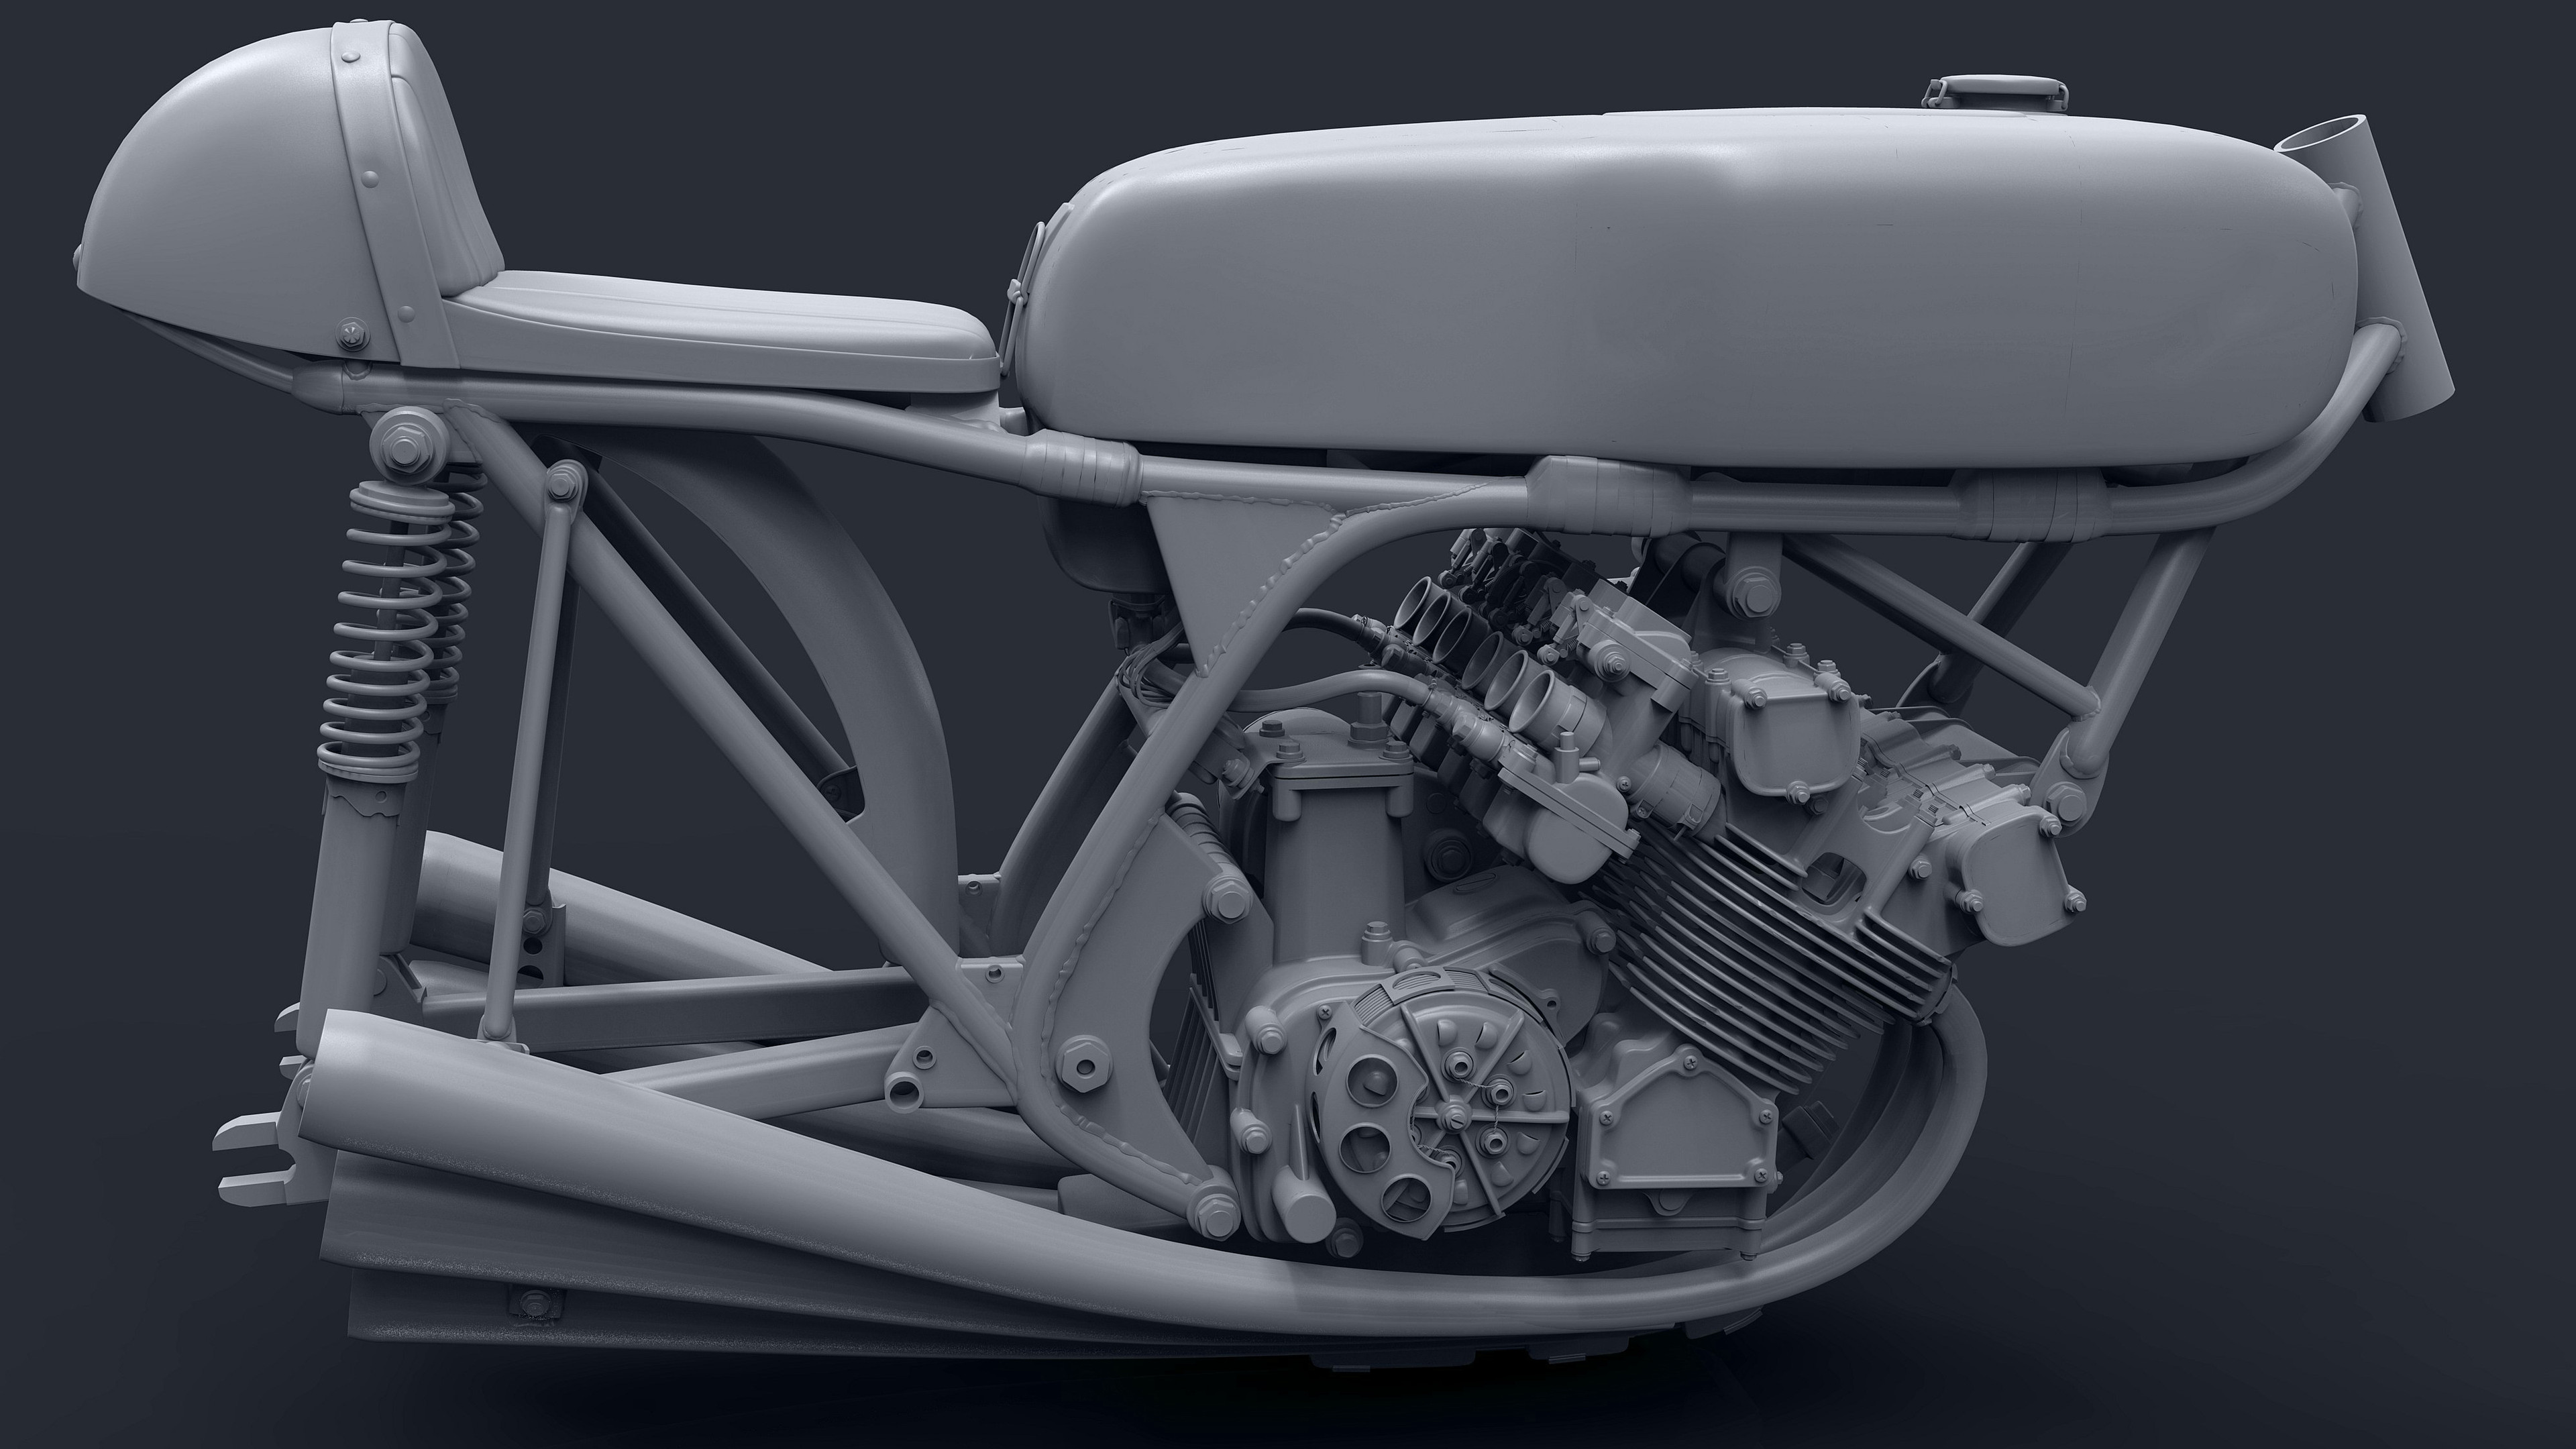 In-process render showing clutch side details.